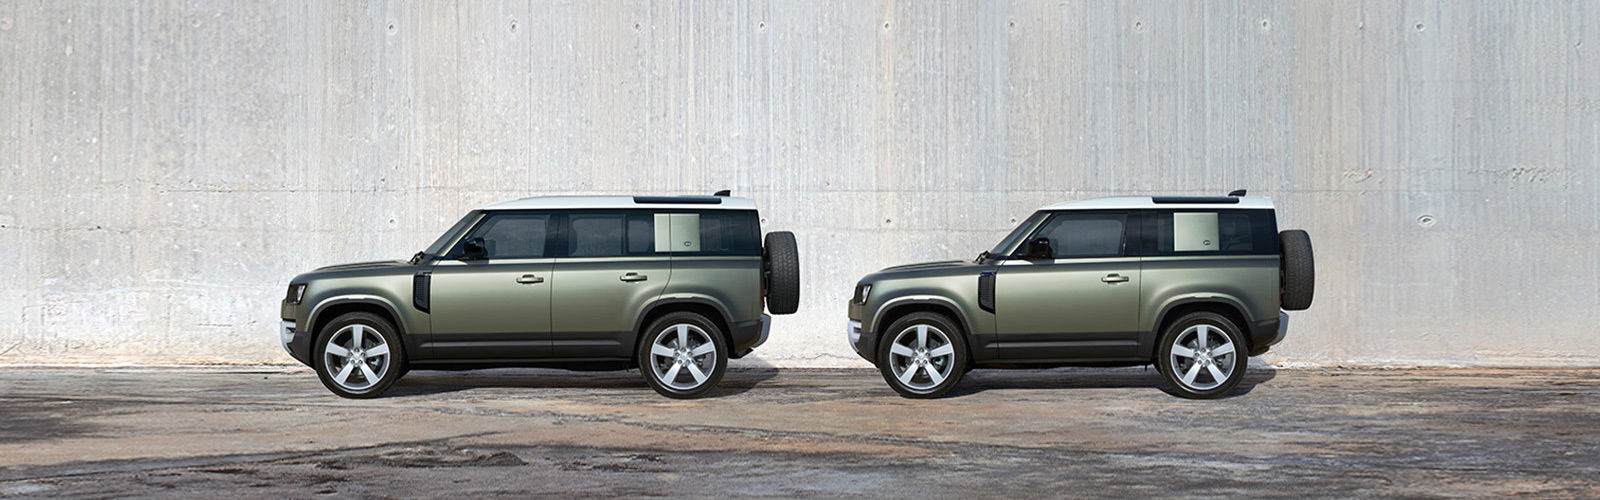 Land Rover 4x4 Cars & Luxury SUV | Land